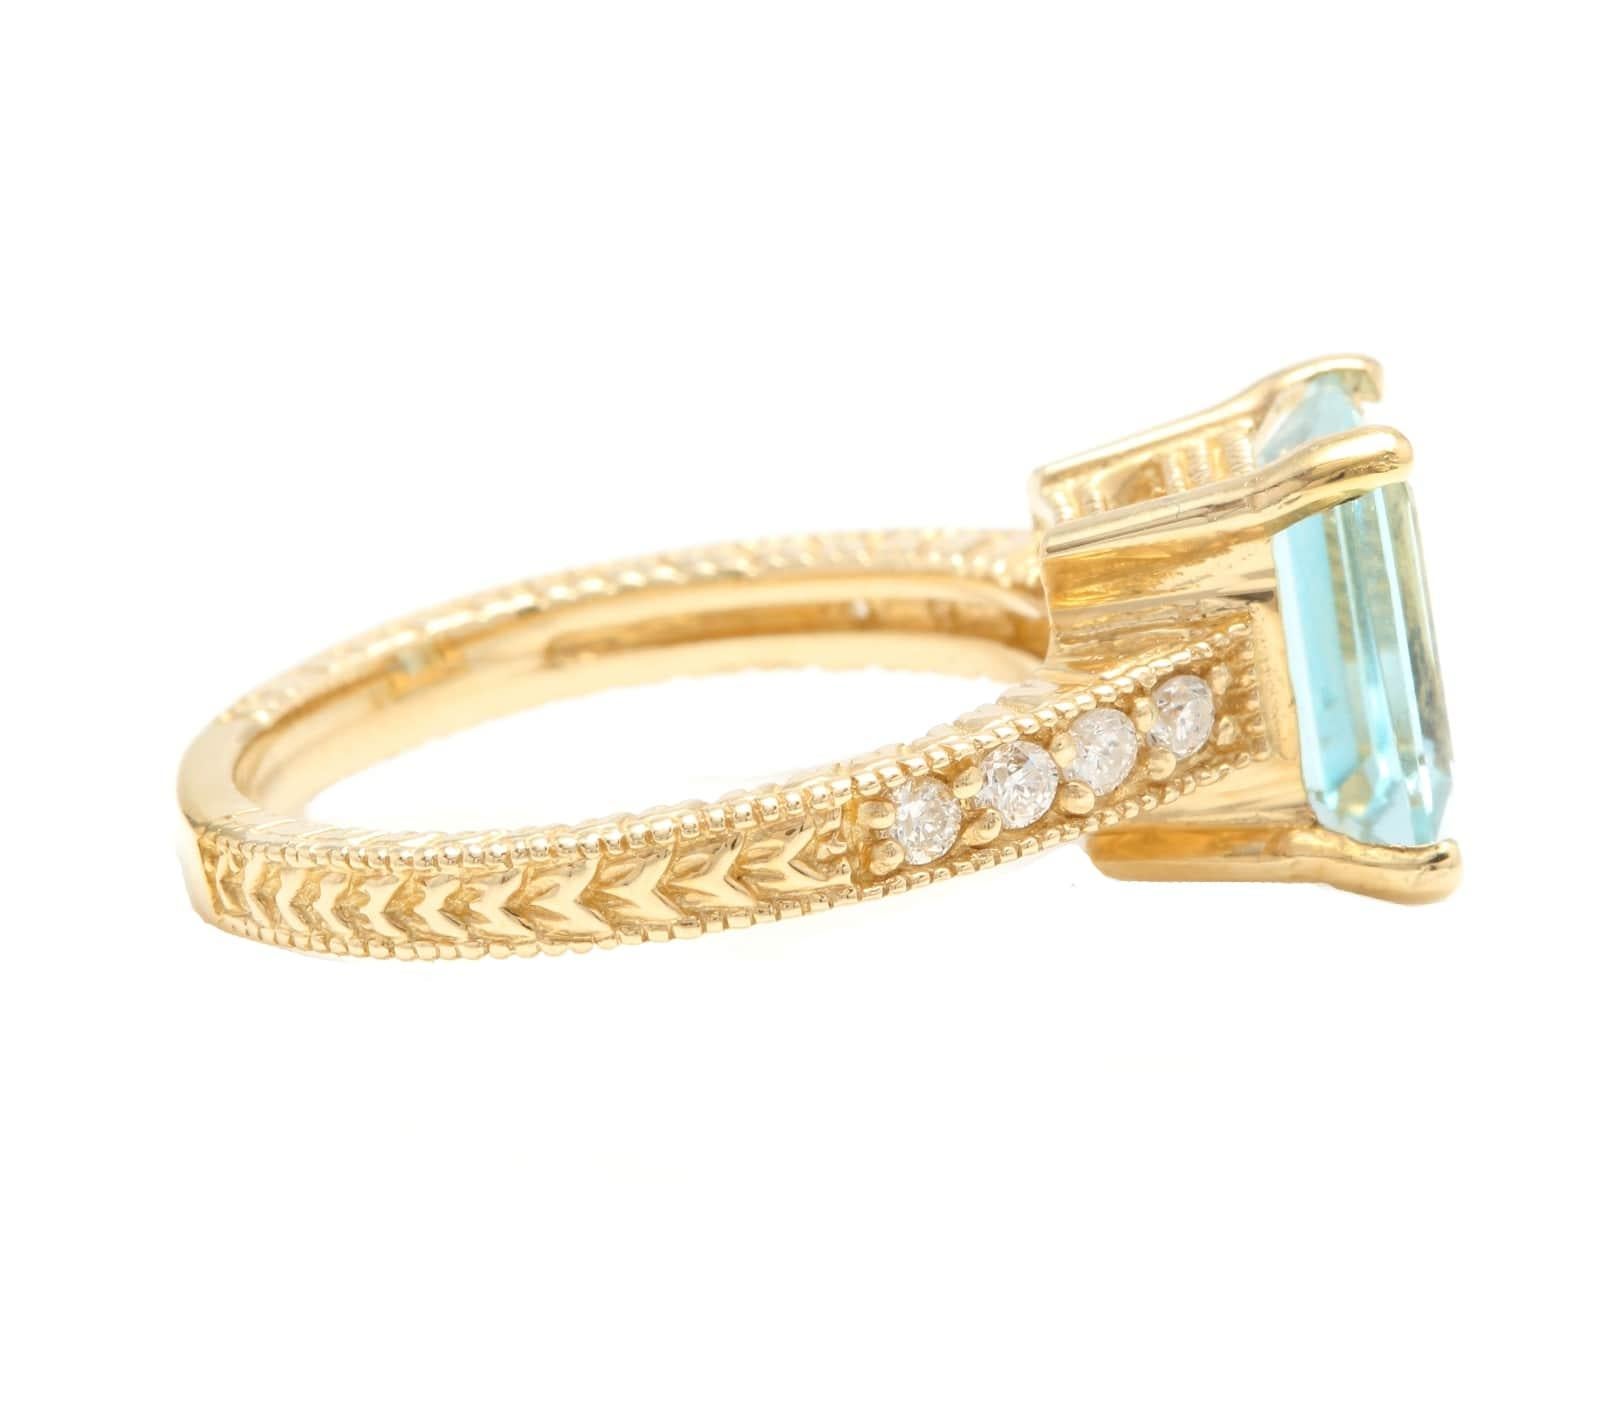 Emerald Cut 3.20 Carats Impressive Natural Aquamarine and Diamond 14K Yellow Gold Ring For Sale